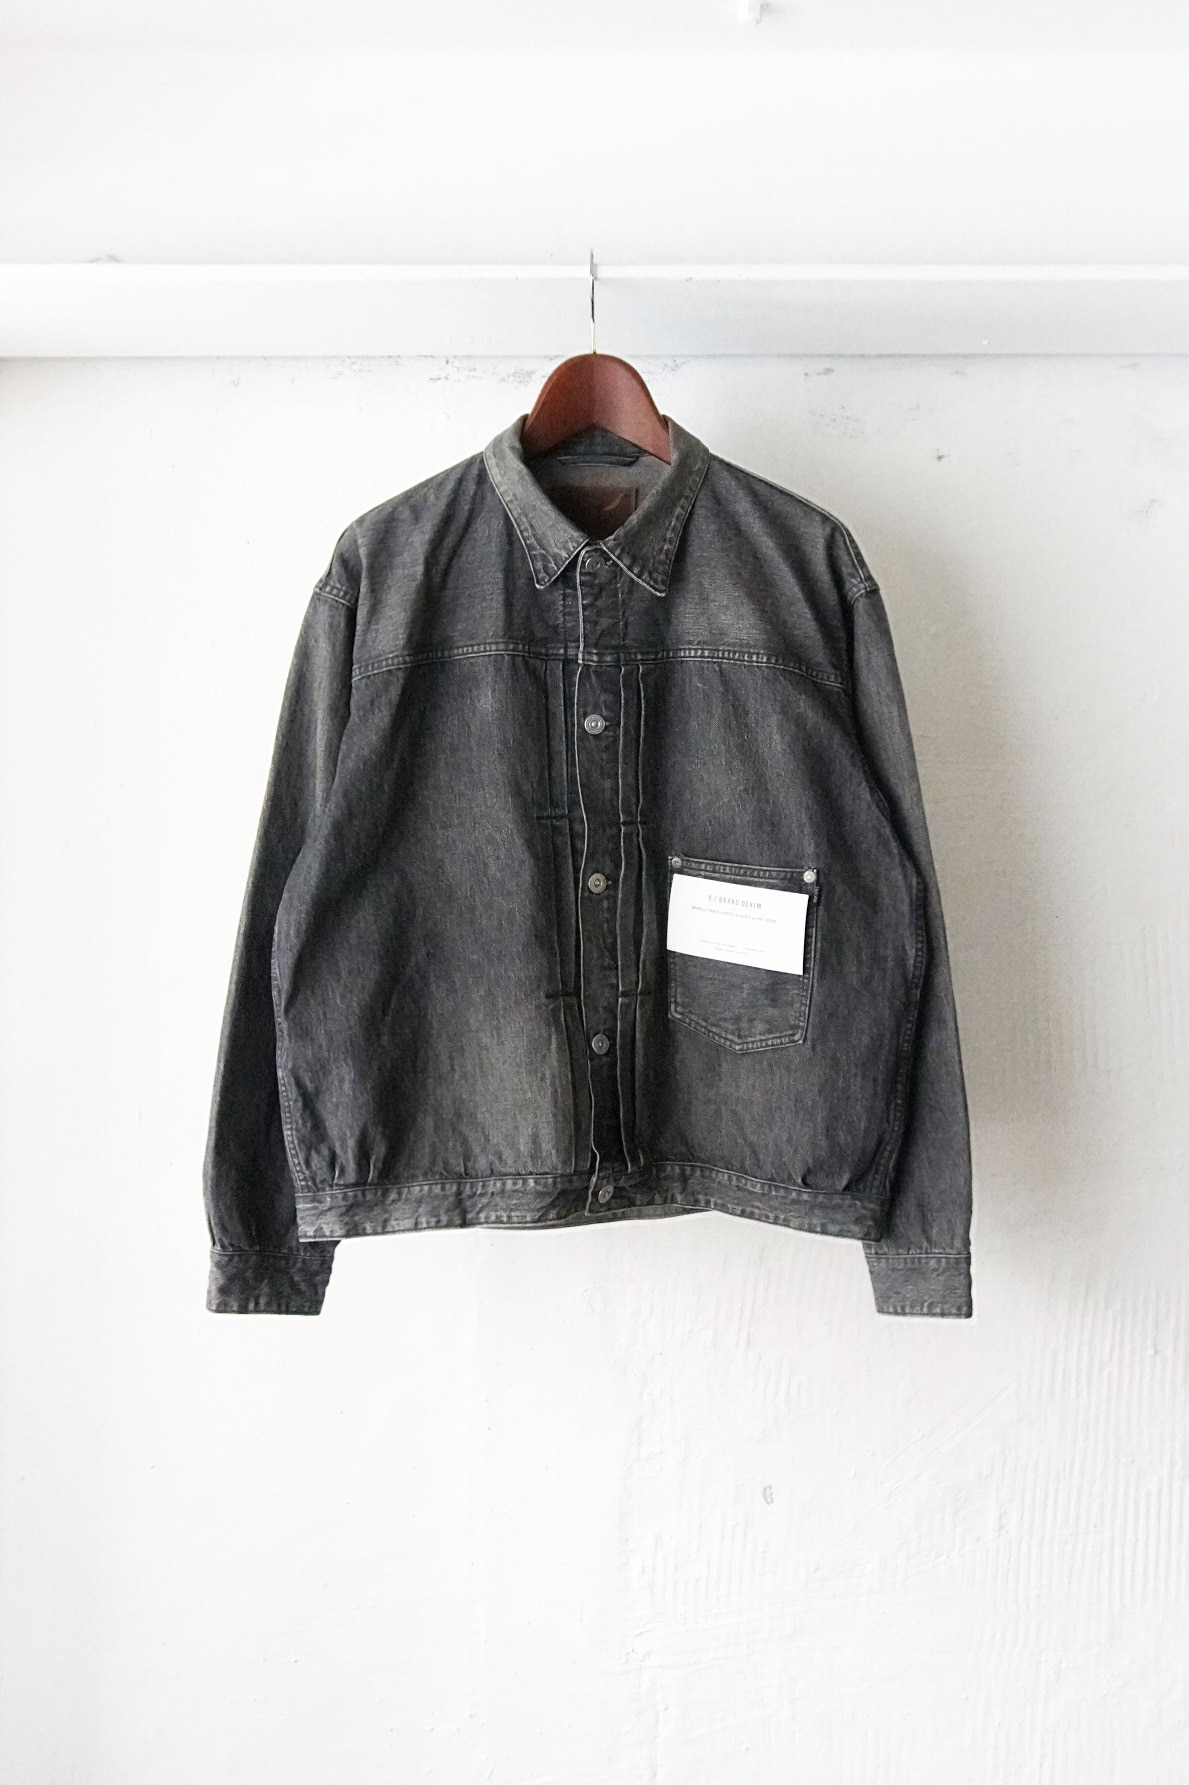 [OLD JOE BRAND] Riveted One Pocket Jean Jacket - Black